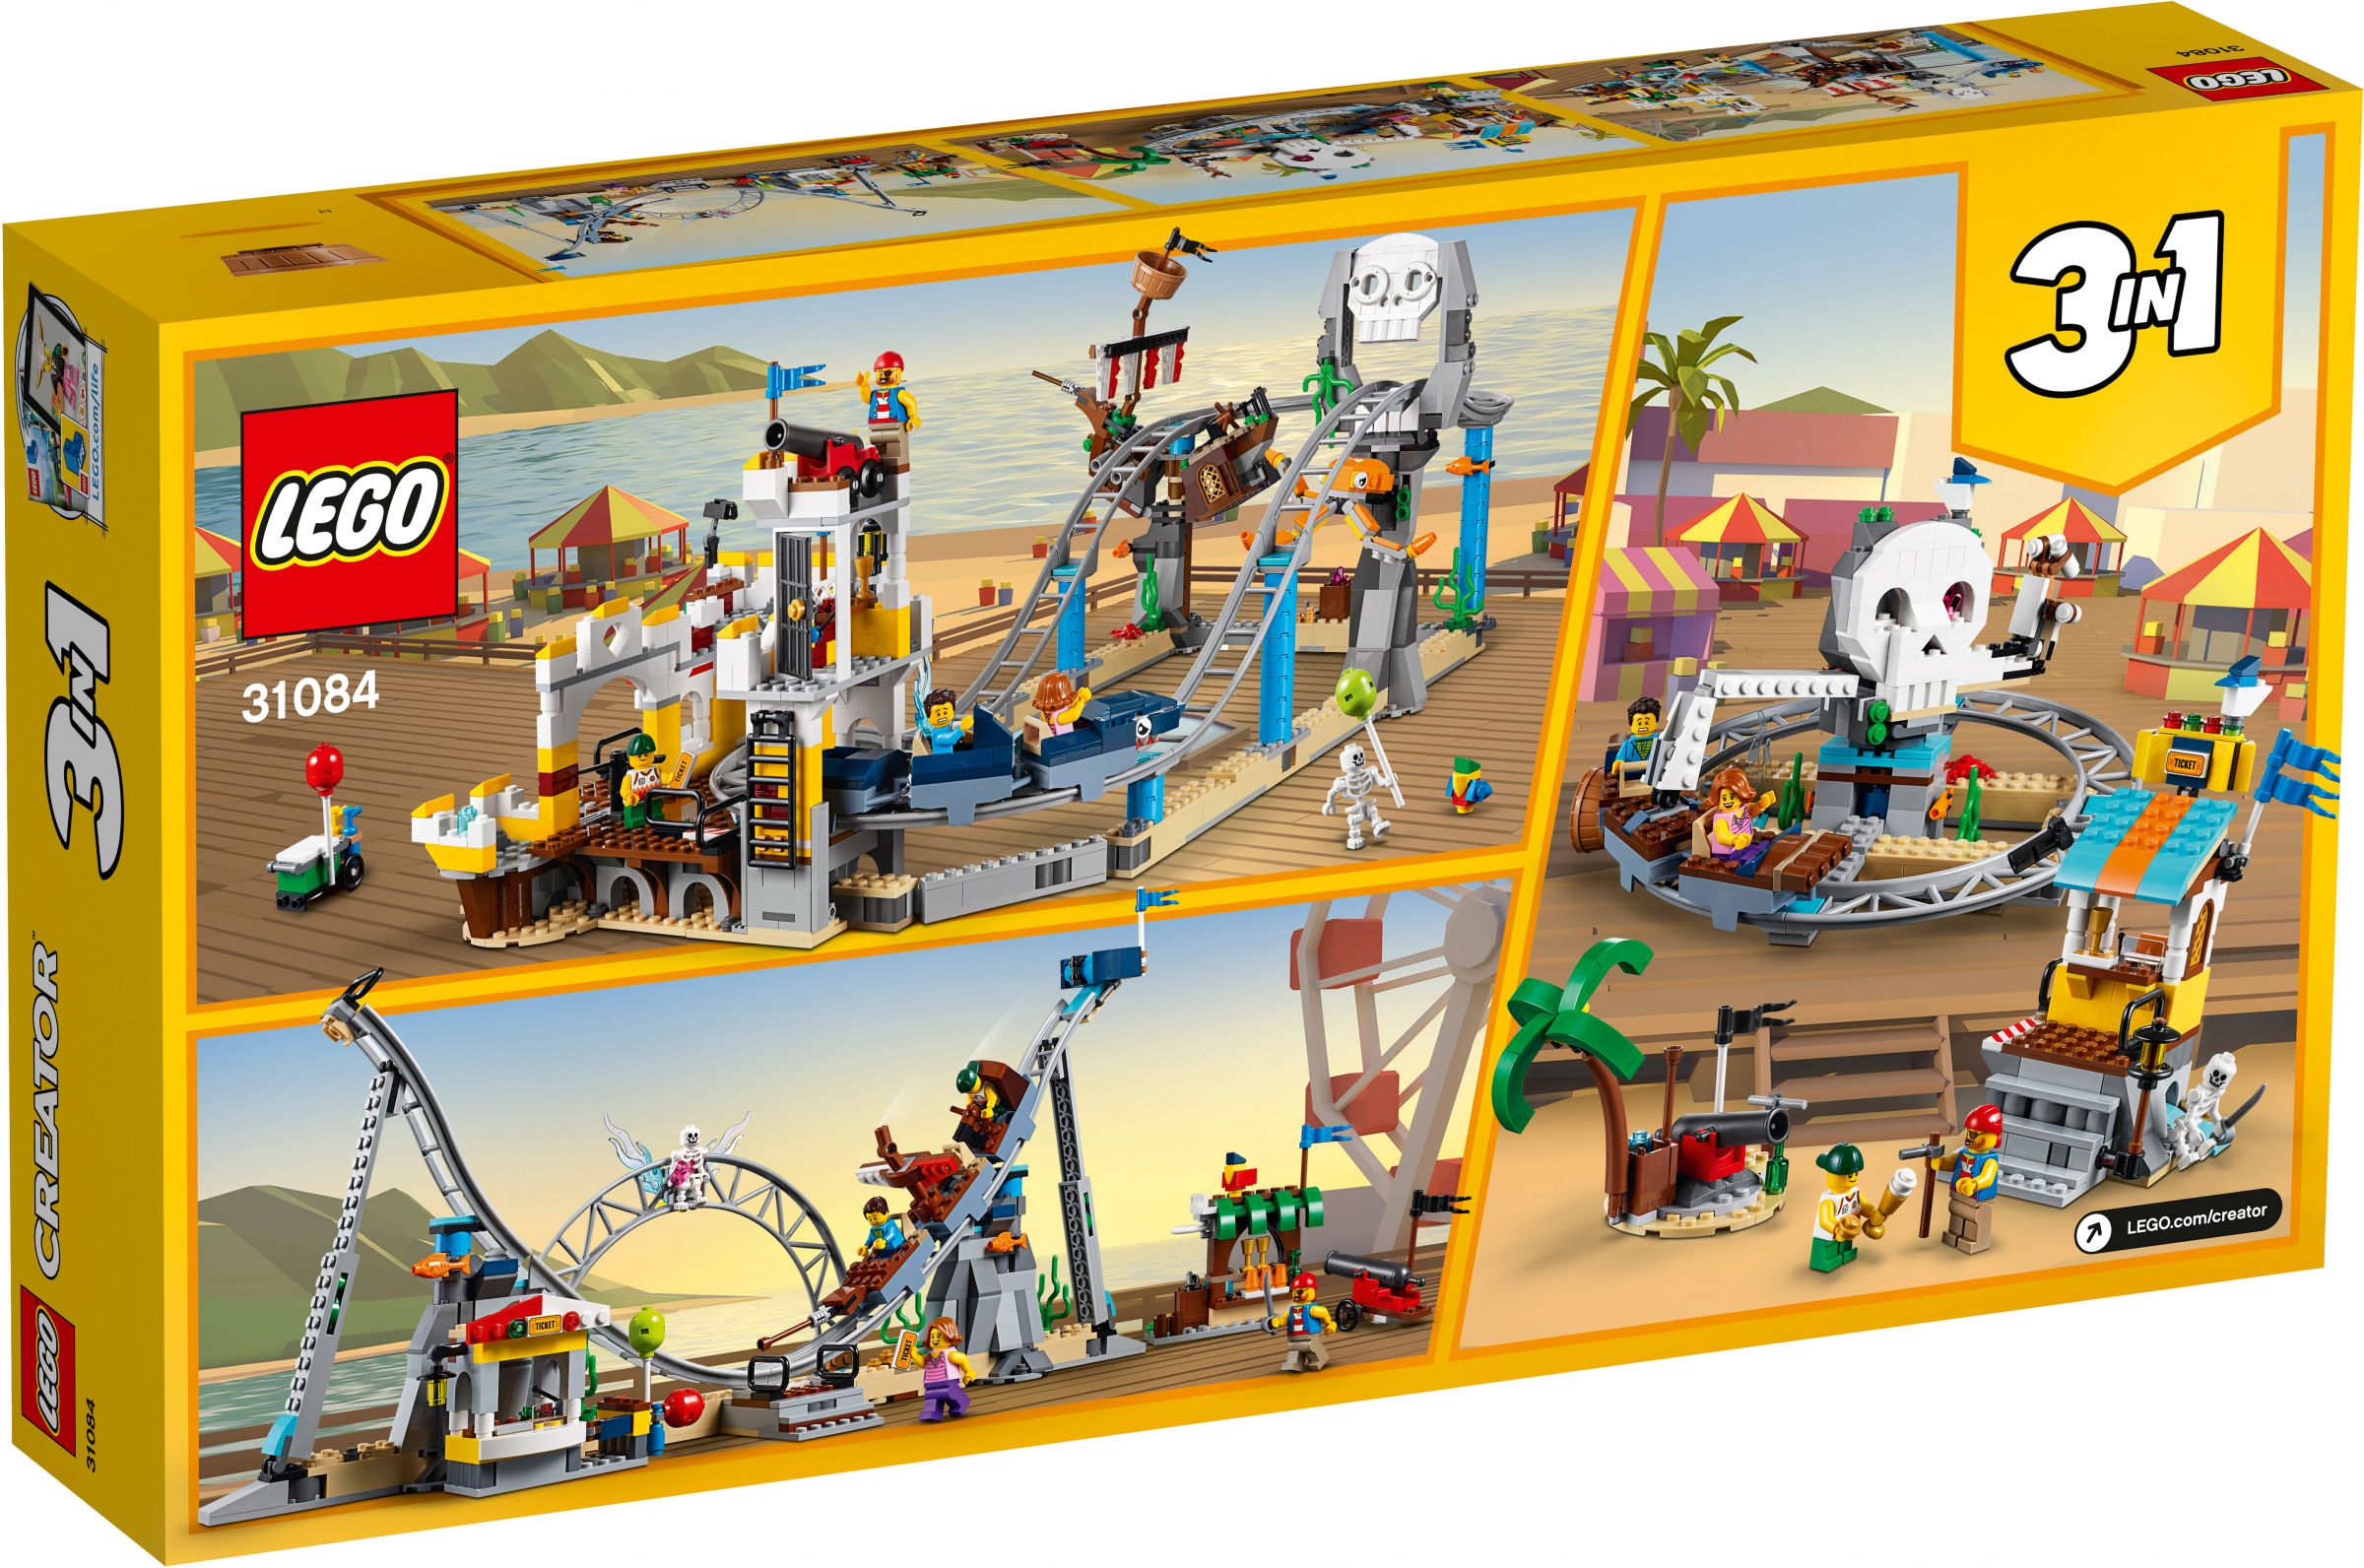 LEGO Creator 31084 Piraten-Achterbahn LEGO_31084_Box_Back.jpg